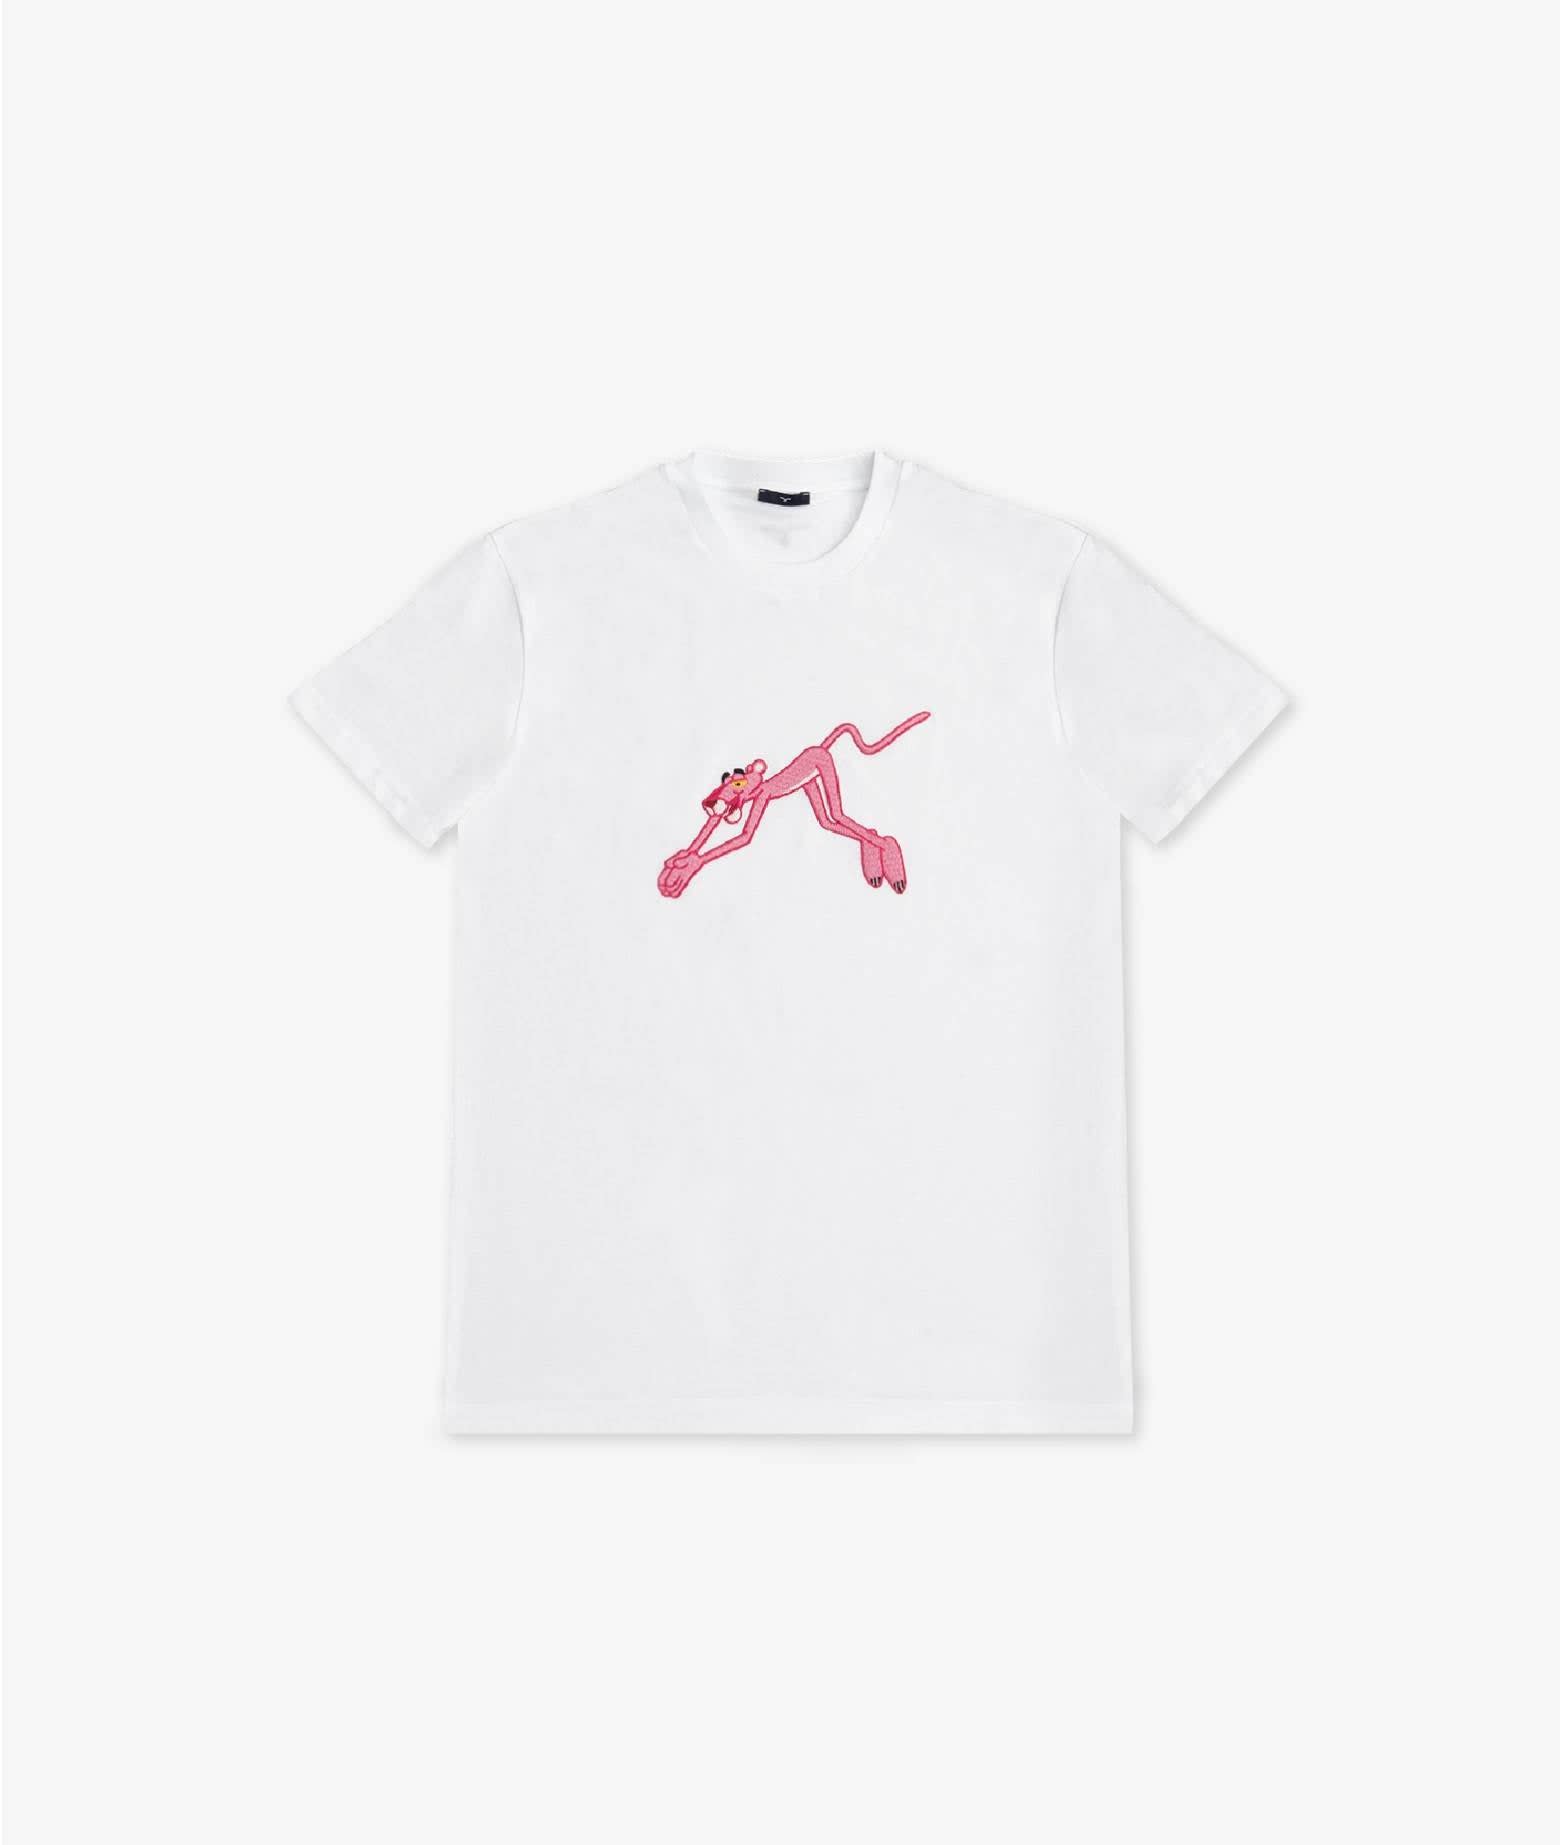 Larusmiani T-shirt Pink Panther T-shirt In White